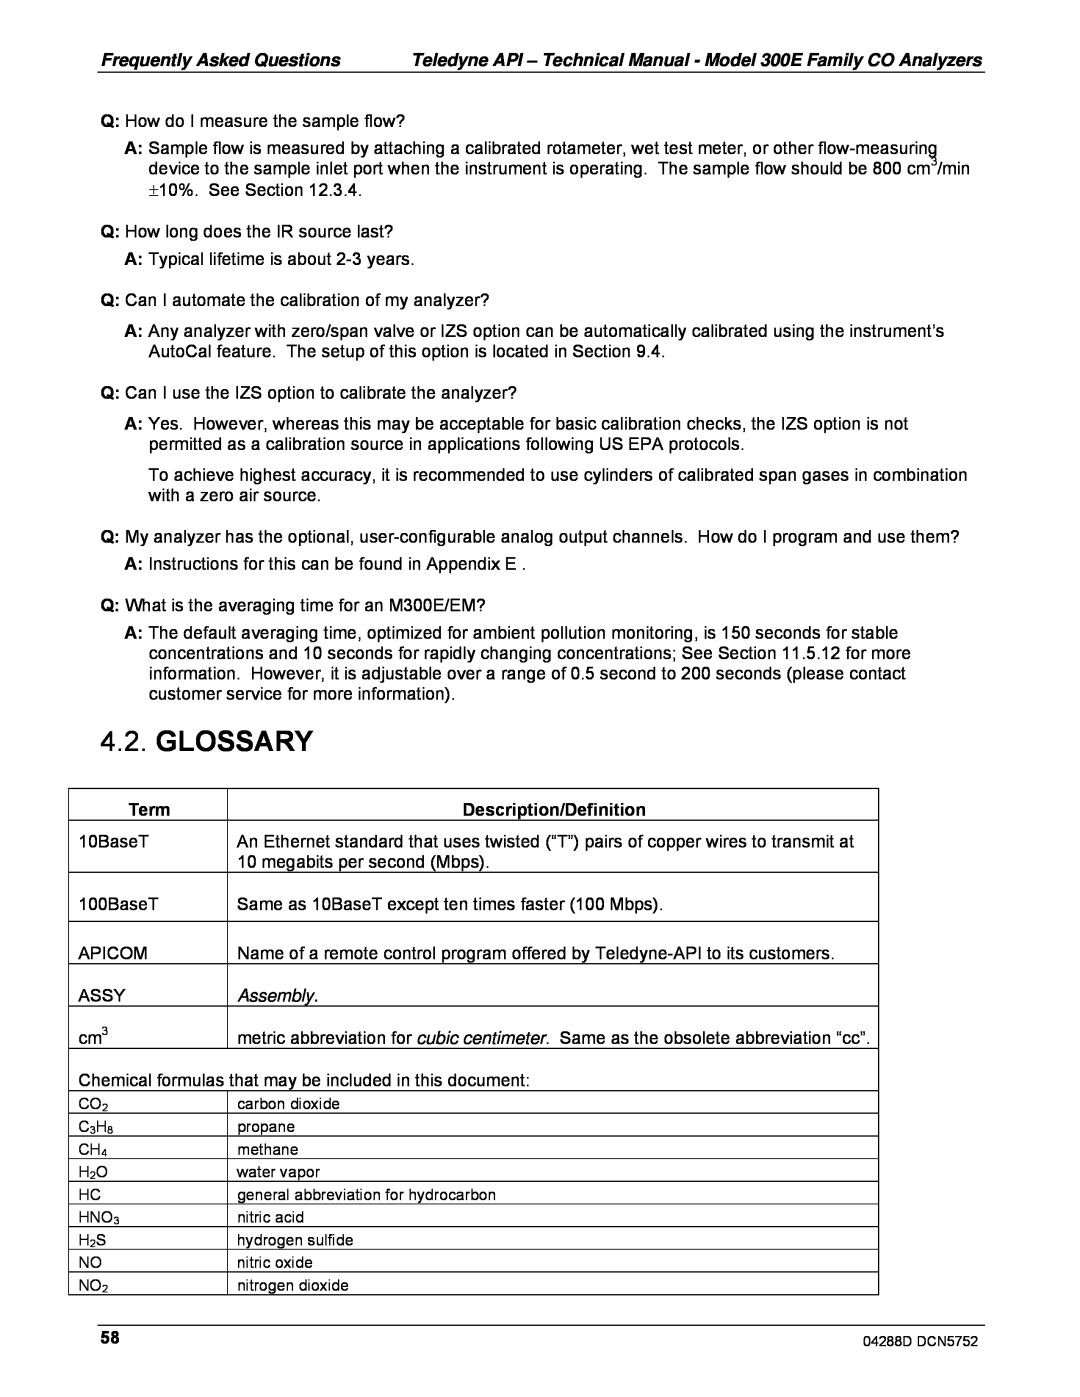 Teledyne M300EM operation manual Glossary, Term, Description/Definition 